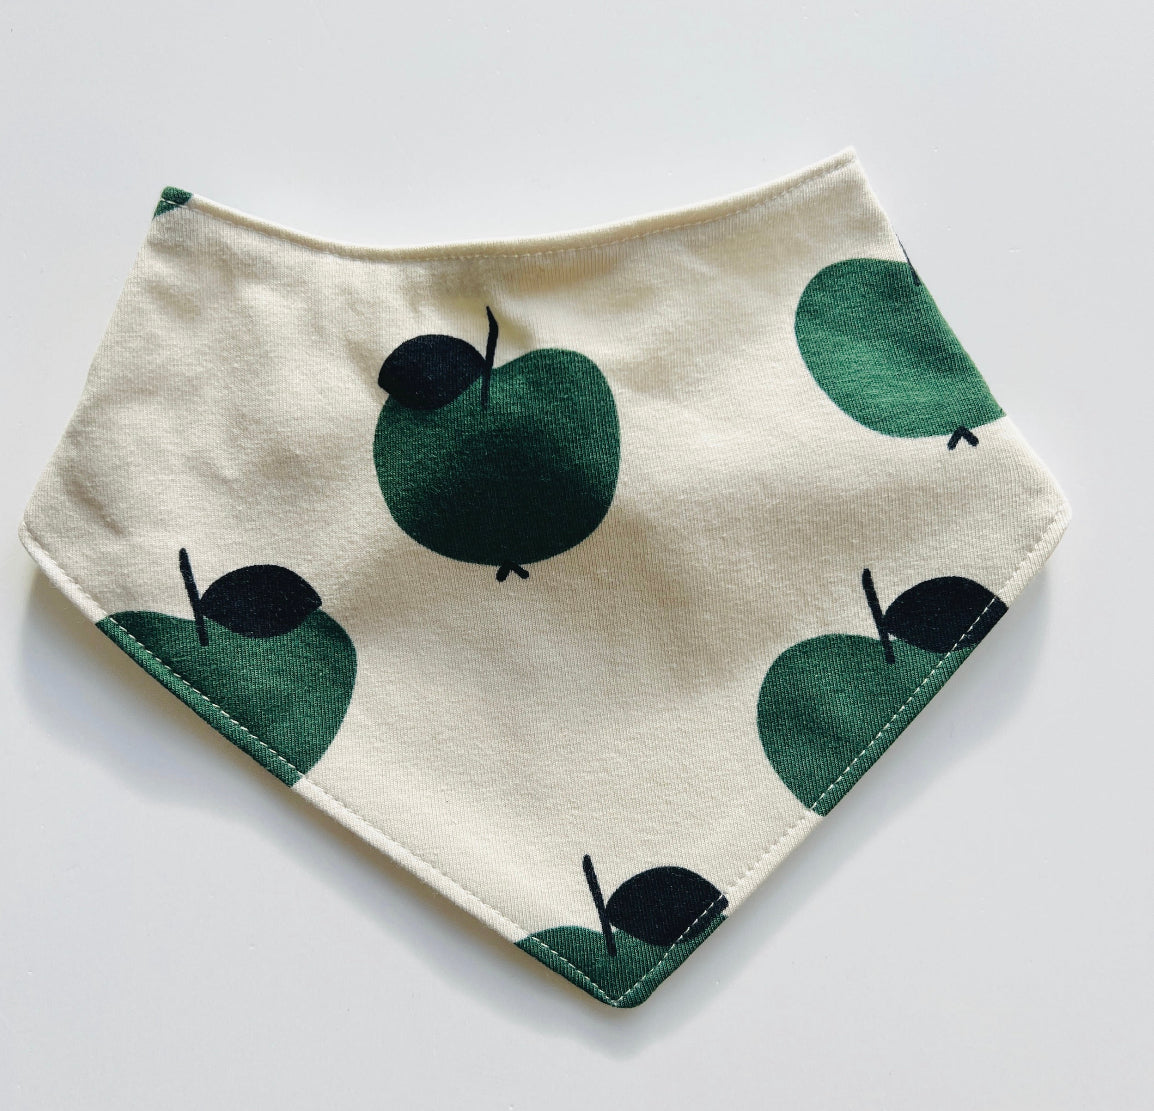 Eddie & Bee organic cotton Baby Dribble bib  in Oat "Apple" print.